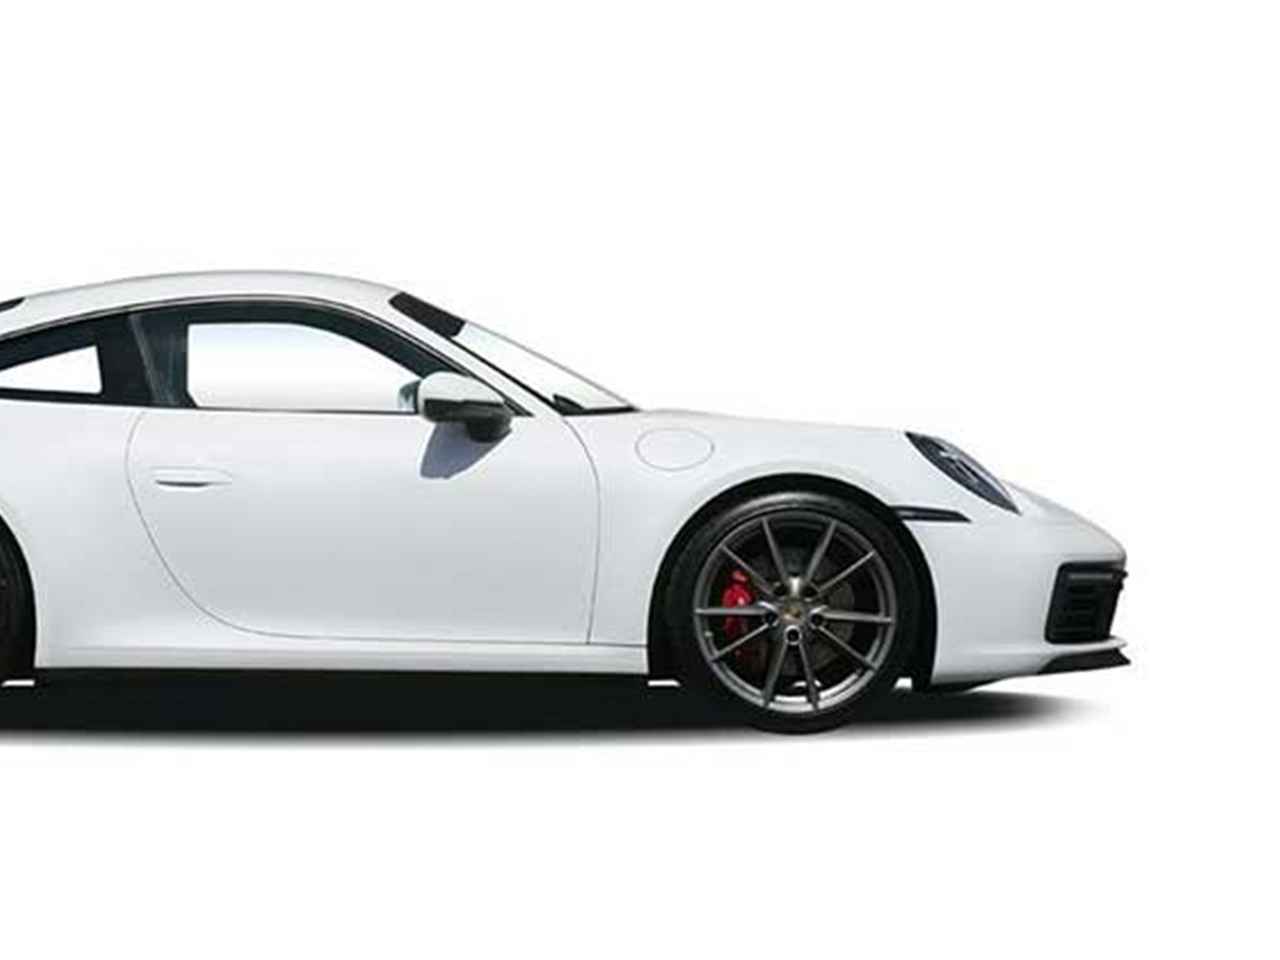 Hire Porsche 911 Carrera Car in London | Hertz Dream Collection